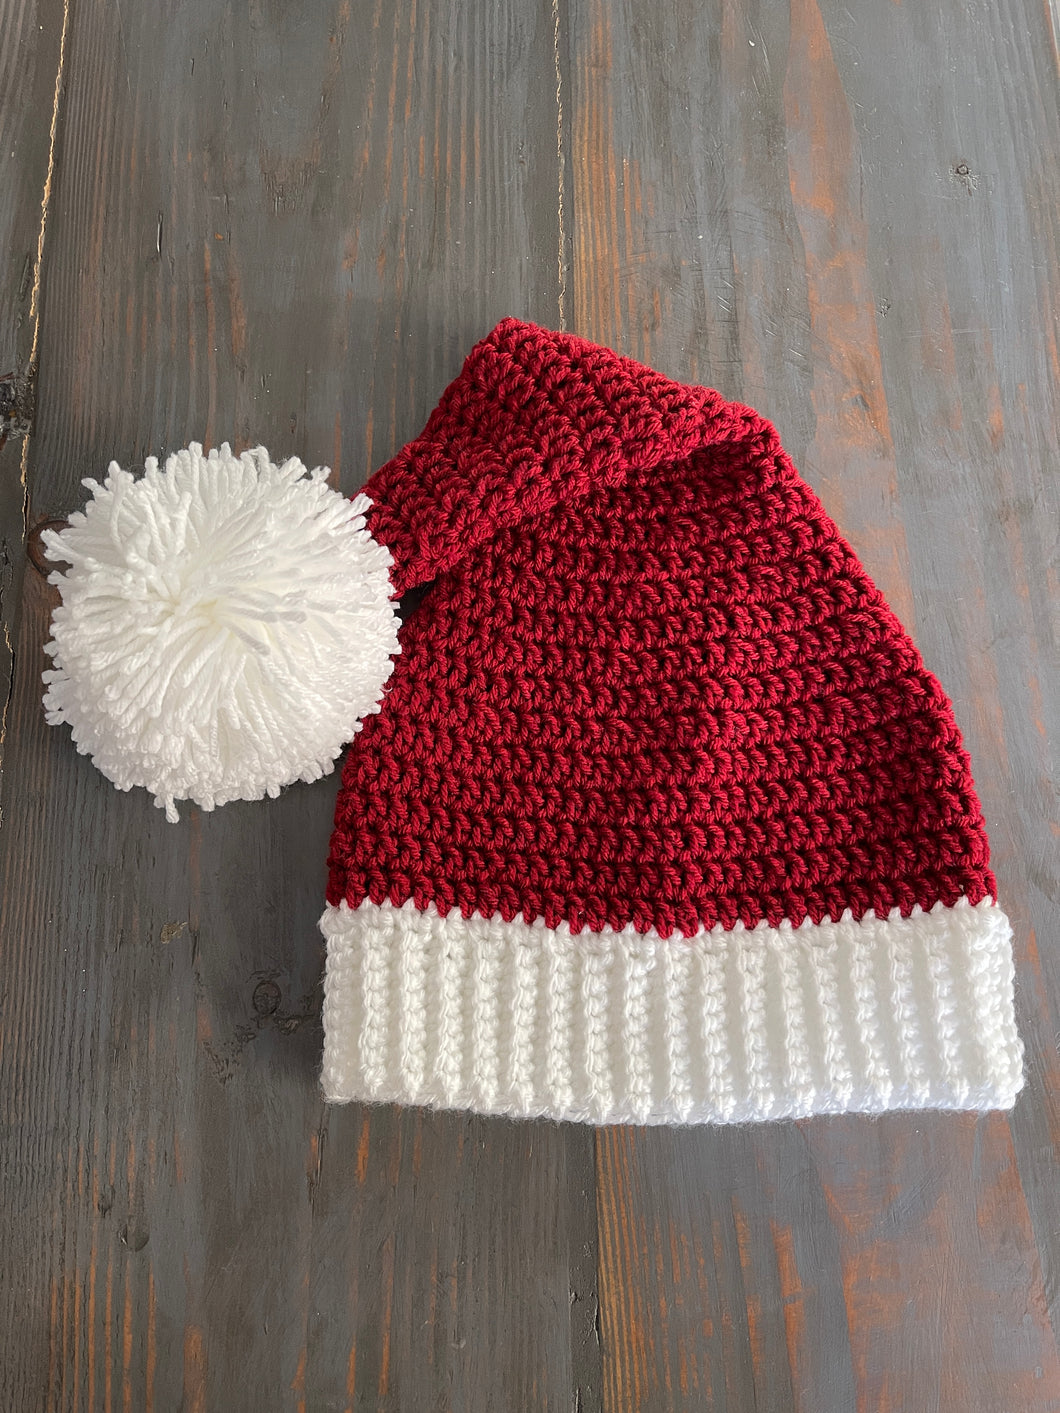 Crochet Christmas Hat - Crochet Santa Hat